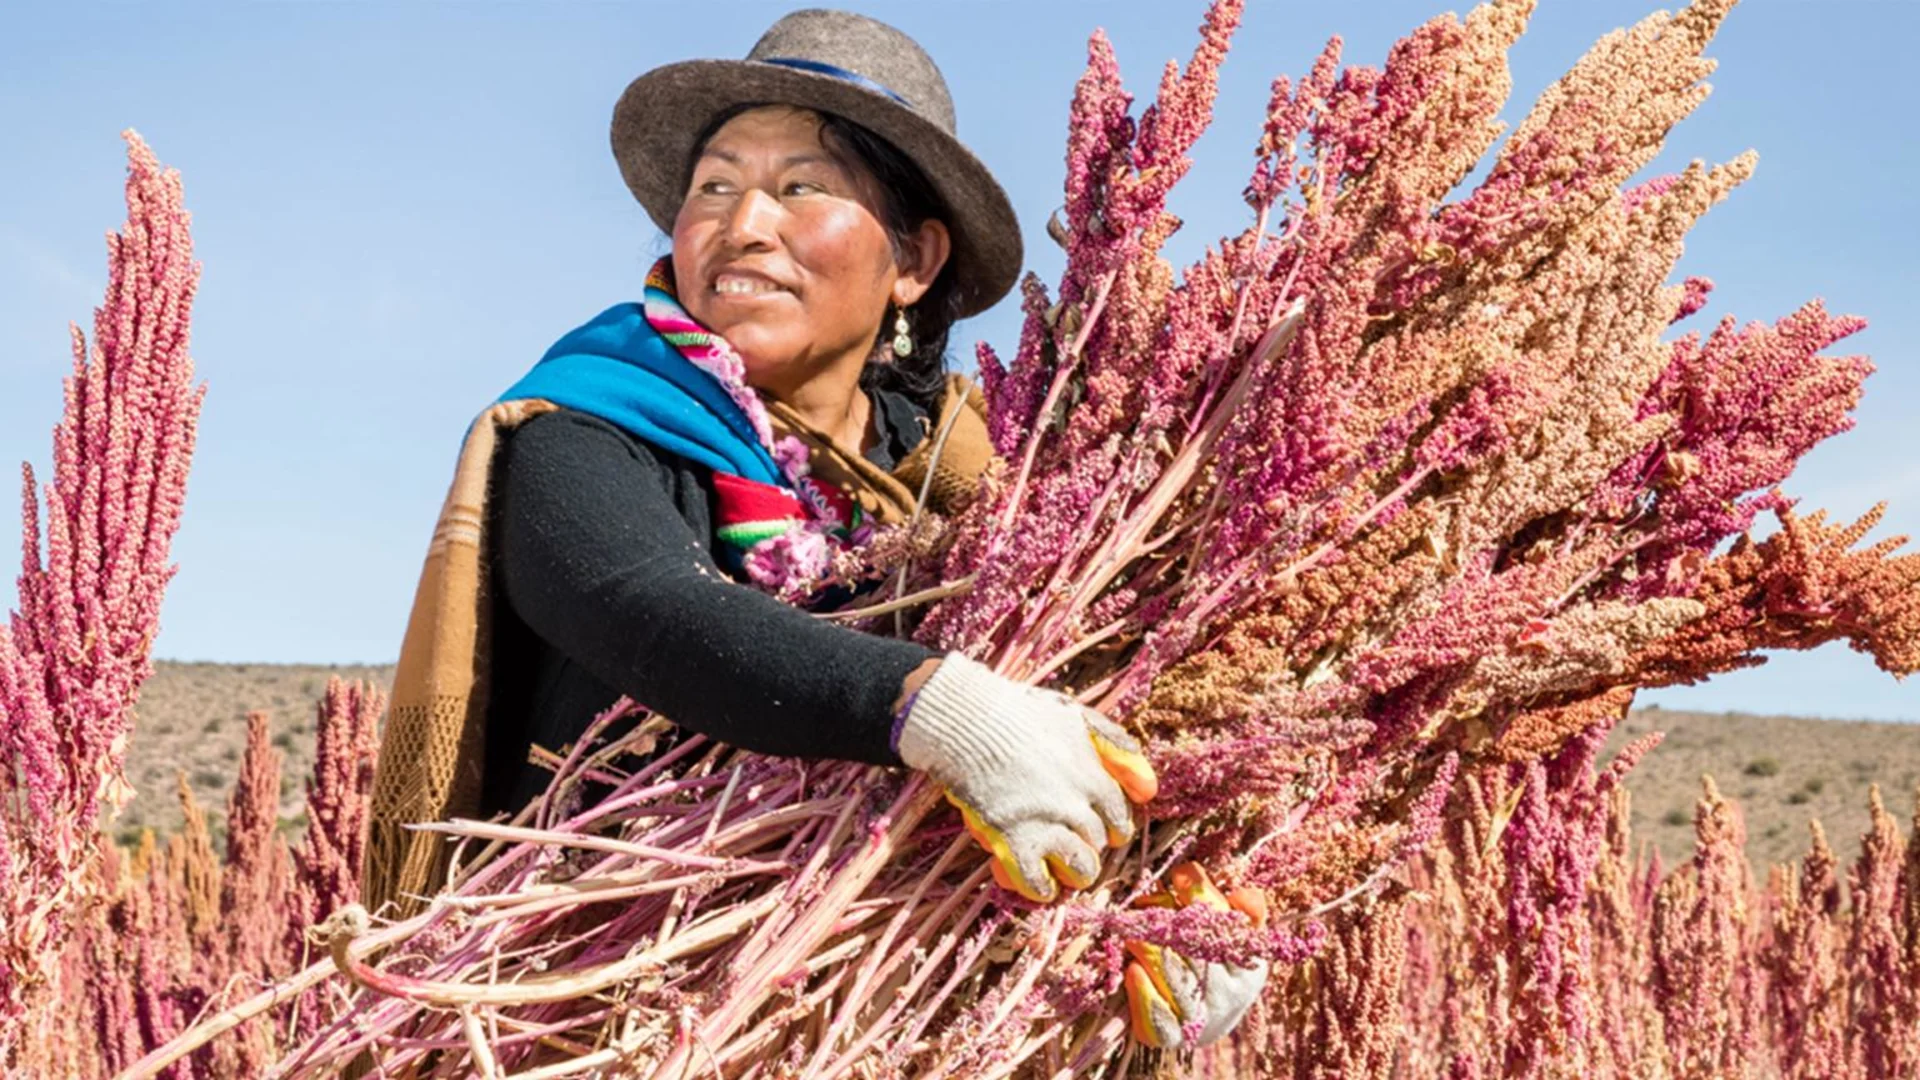 A South American woman harvesting quinoa